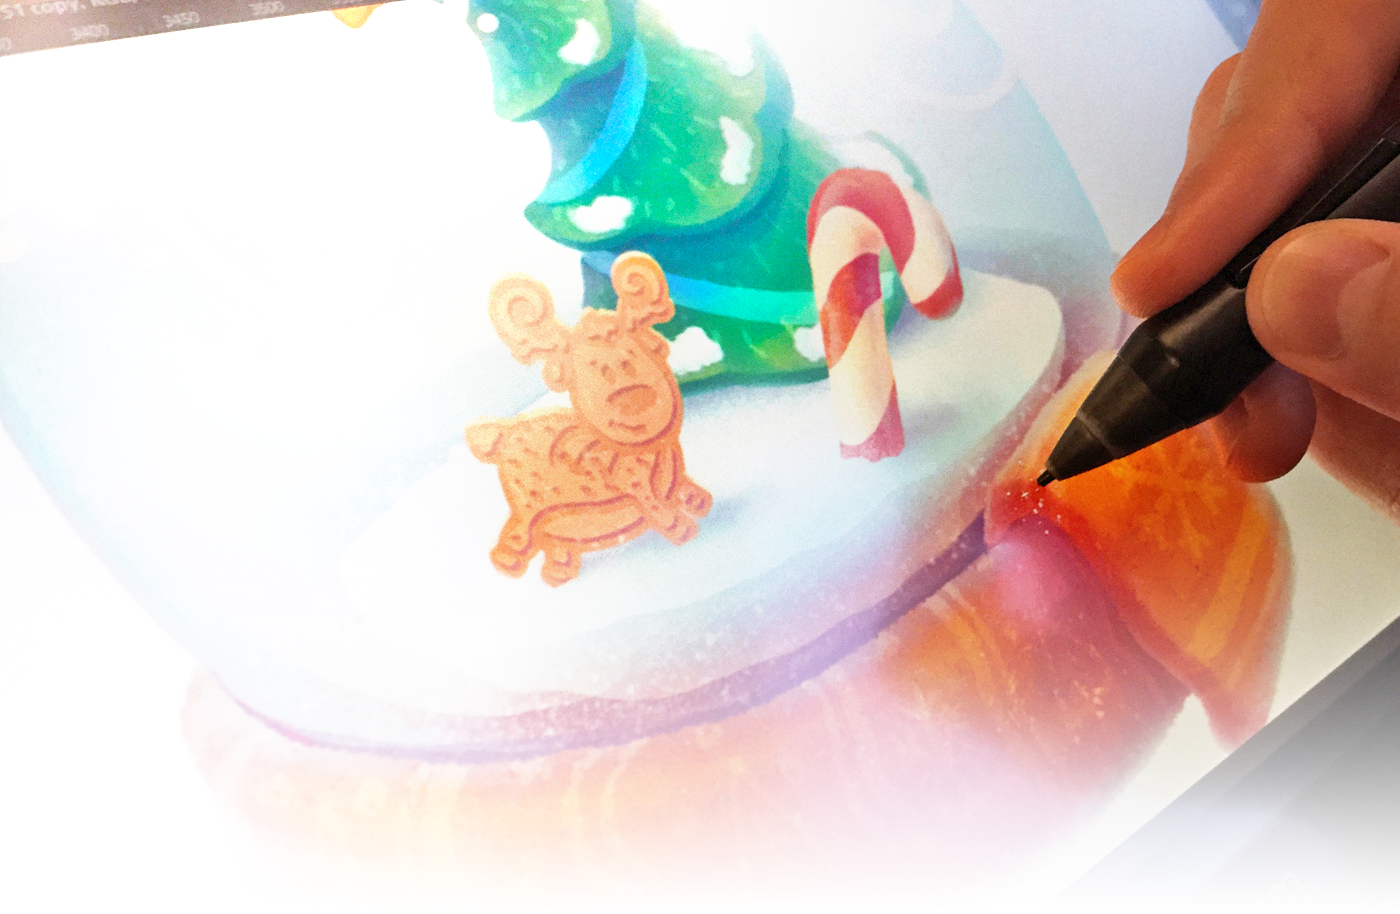 Adobe Portfolio app santa's gifts Santa's Gifts 2016 Christmas Merry Christmas xmas Cookis cookie Christmas snowball snow globes christmas Tree Deer Rudolph Candies